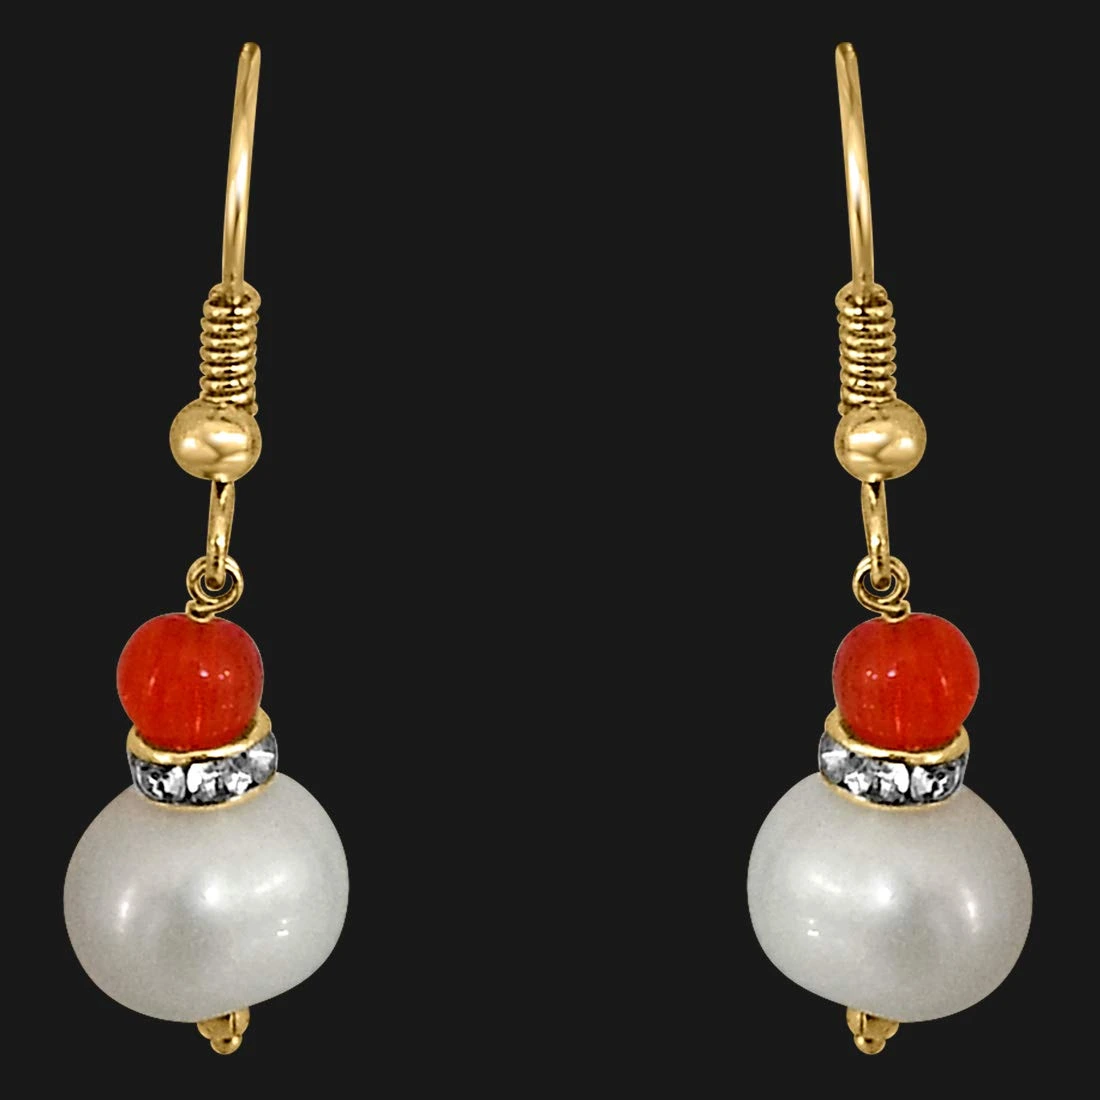 Real Big Pearl & Orange Stone Earrings for Women (SE212)